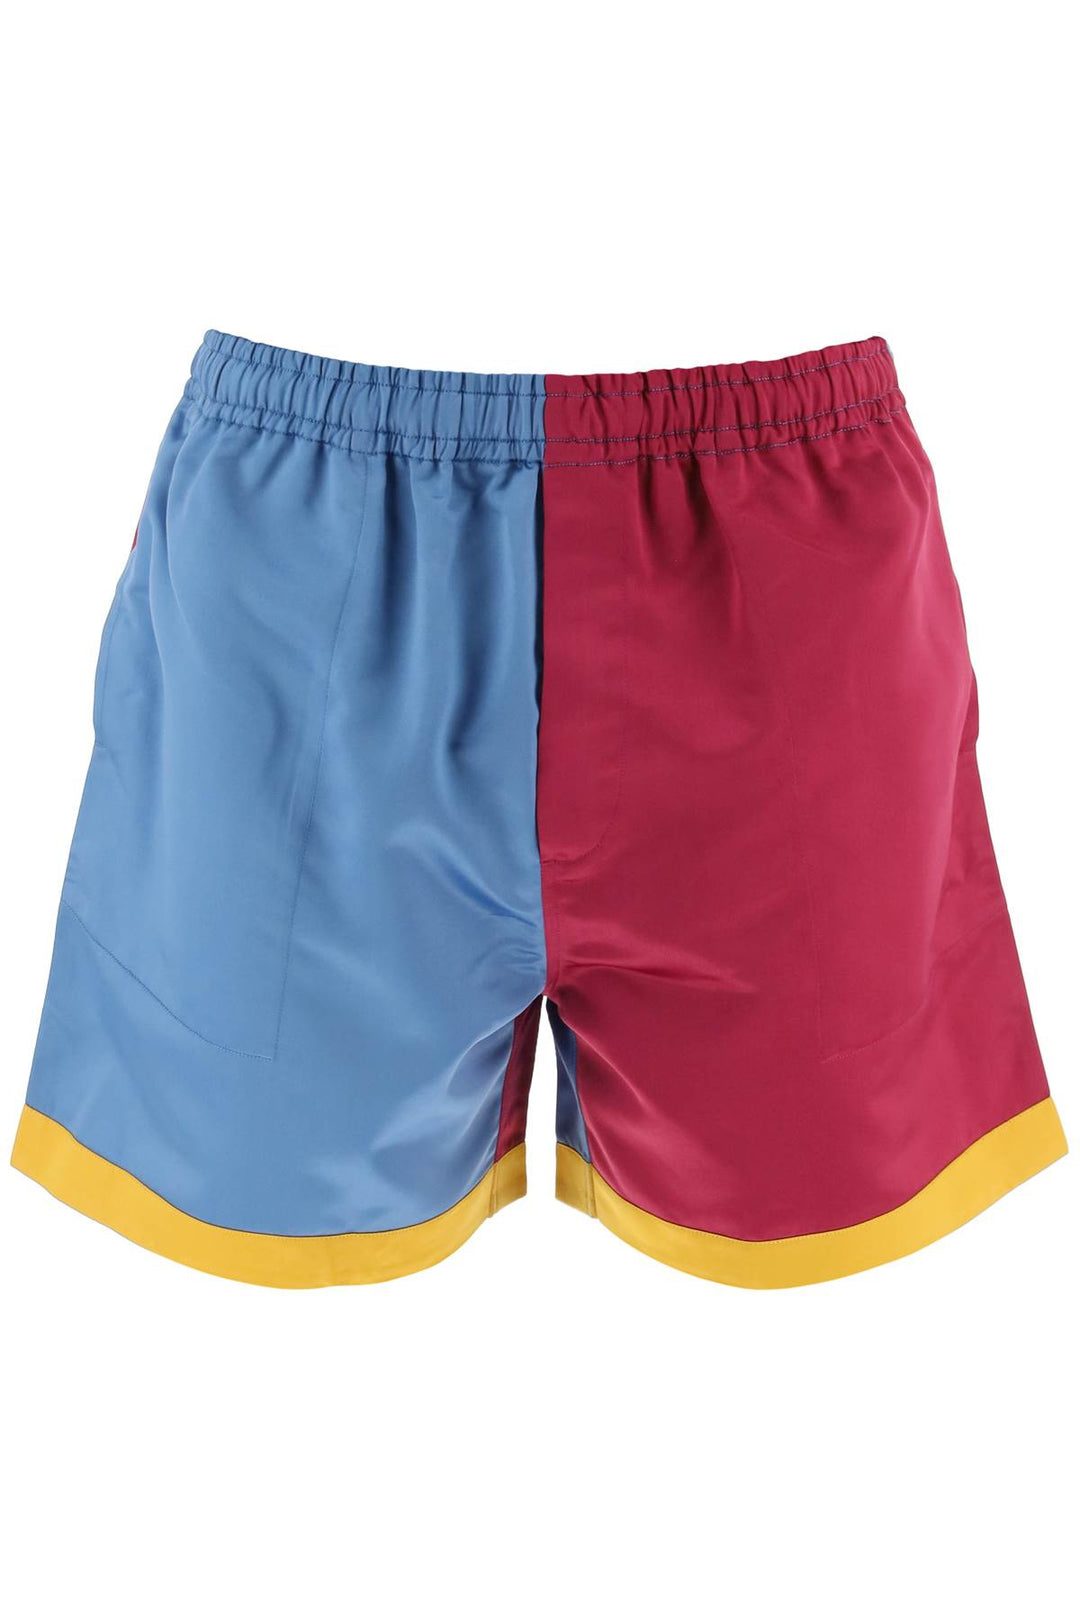 Bode champ color-block shorts-0